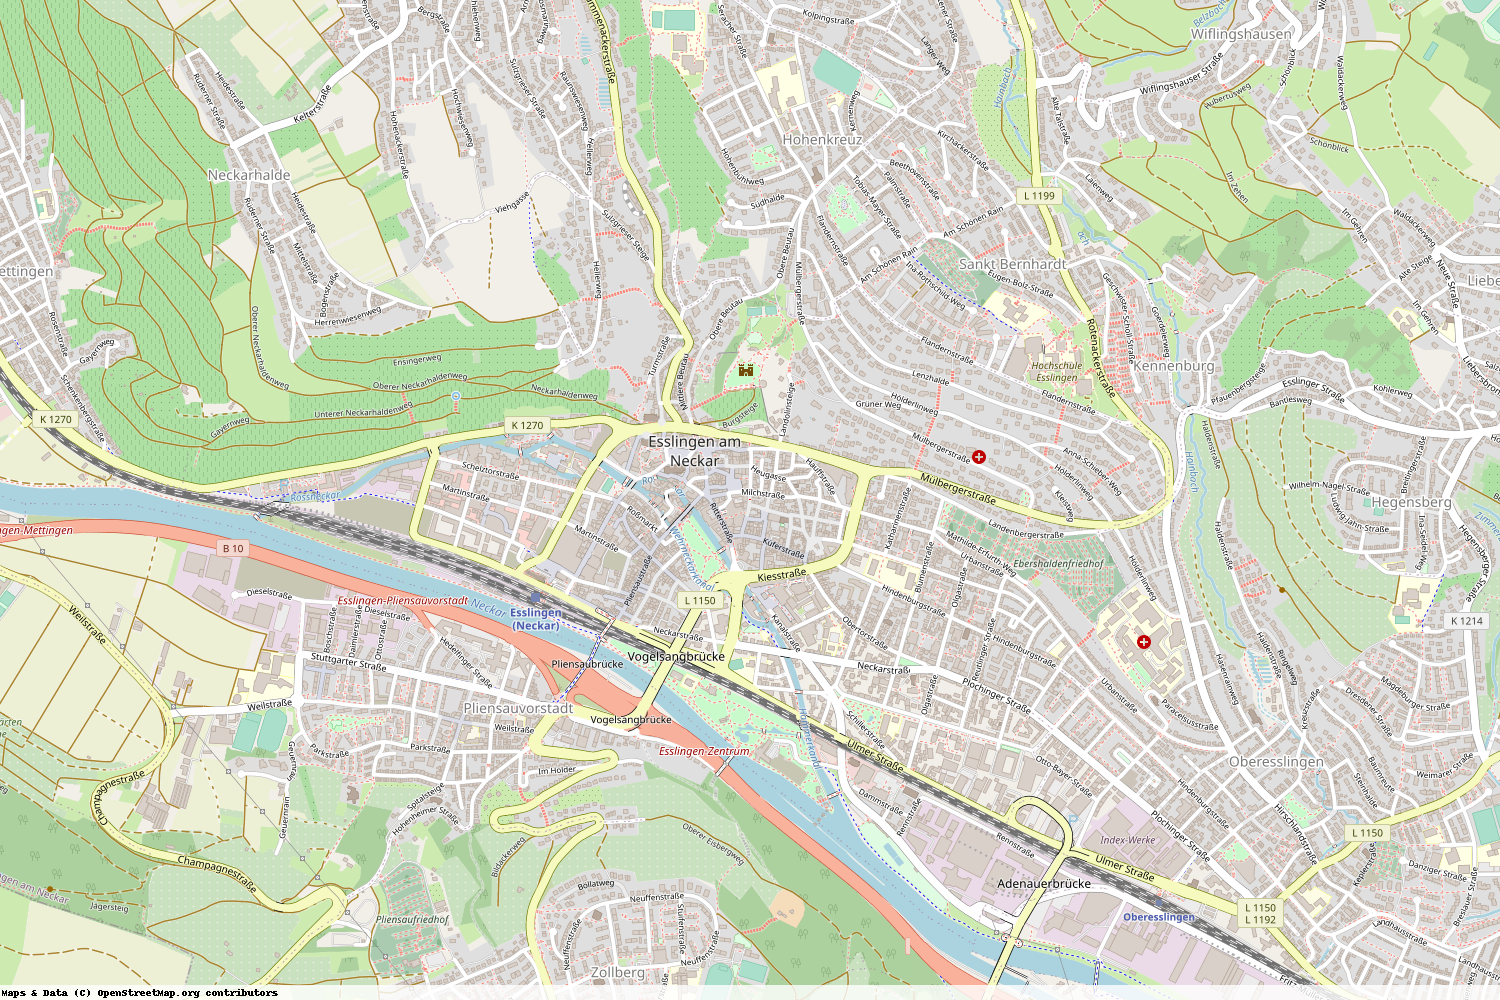 Ist gerade Stromausfall in Baden-Württemberg - Esslingen - Esslingen am Neckar?